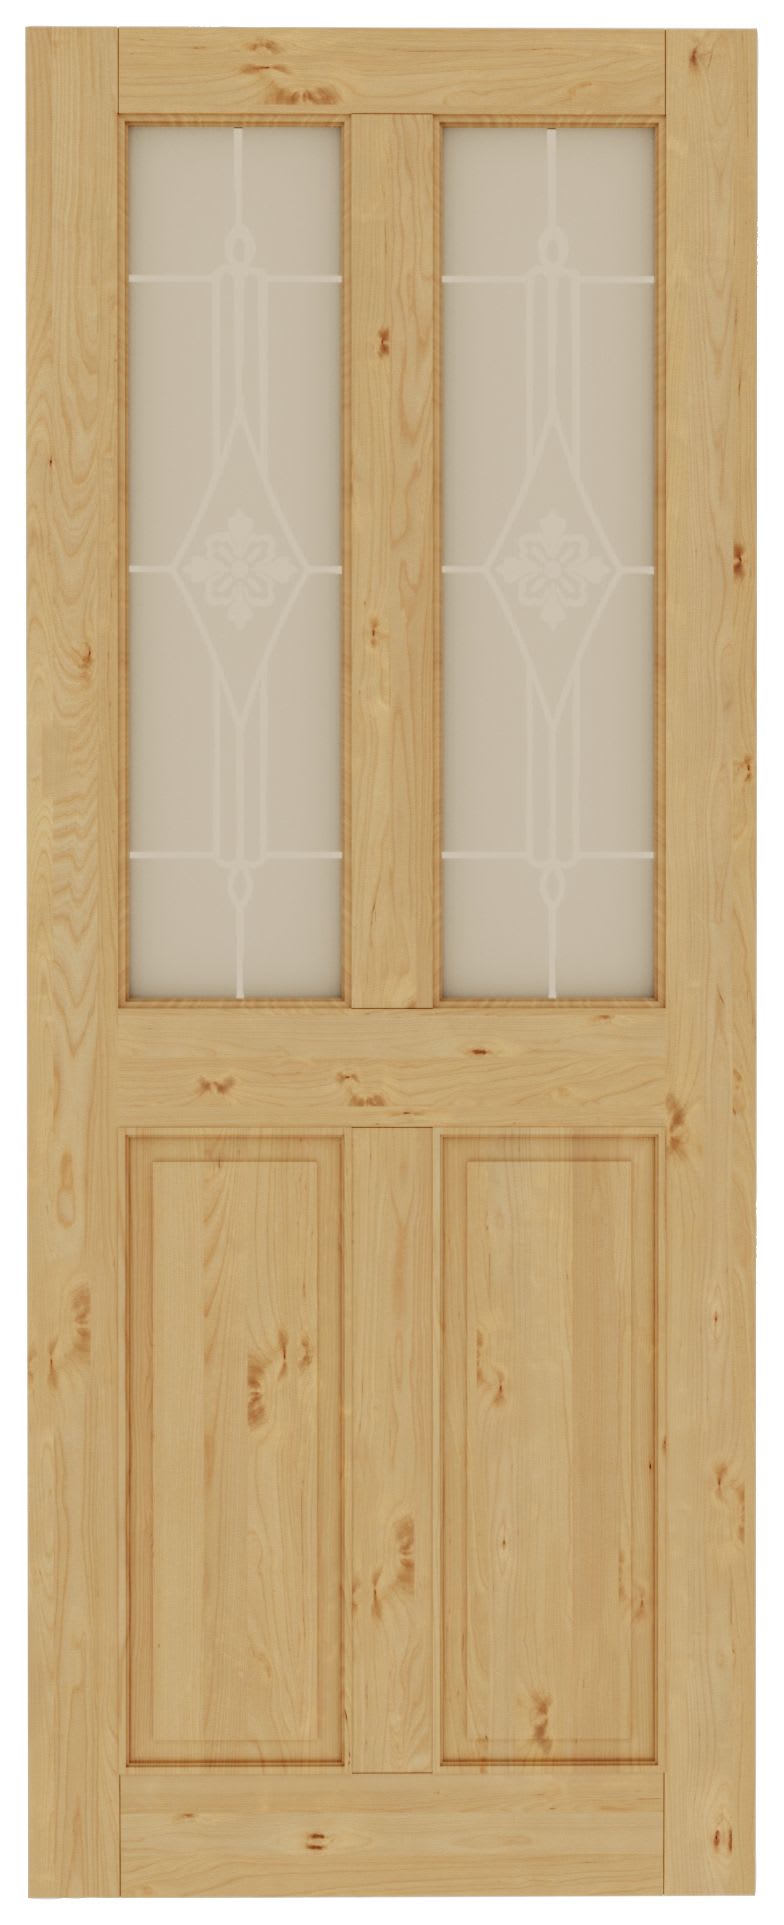 Wickes Chester 4 Panel Knotty Pine Glazed Door